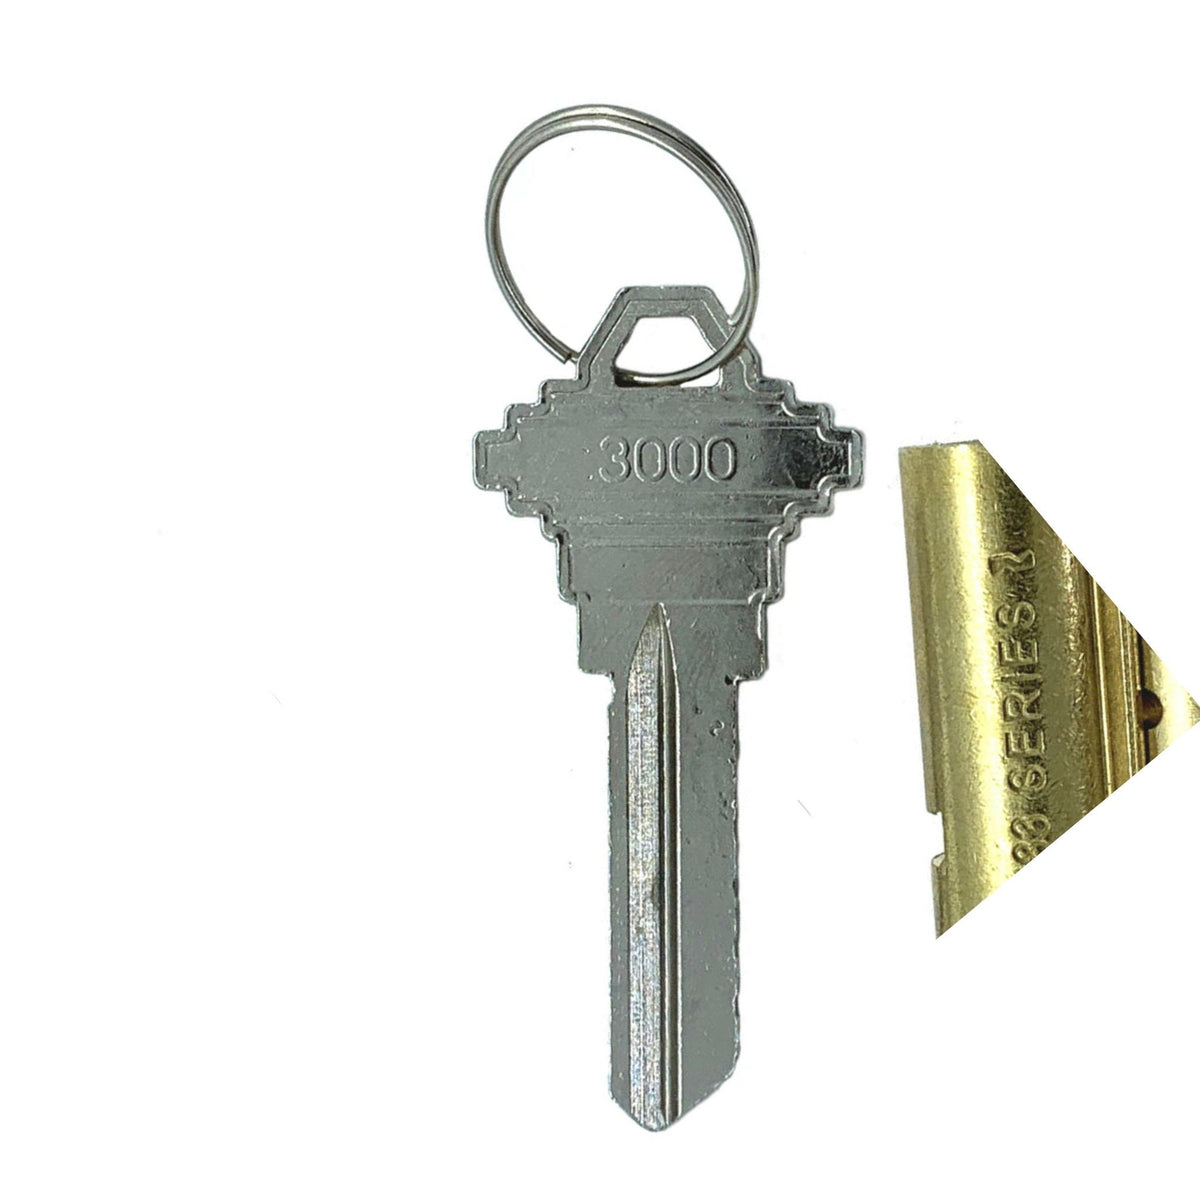 Abus Master Keys - Schlage C-L Key (3000) - The Lock Source